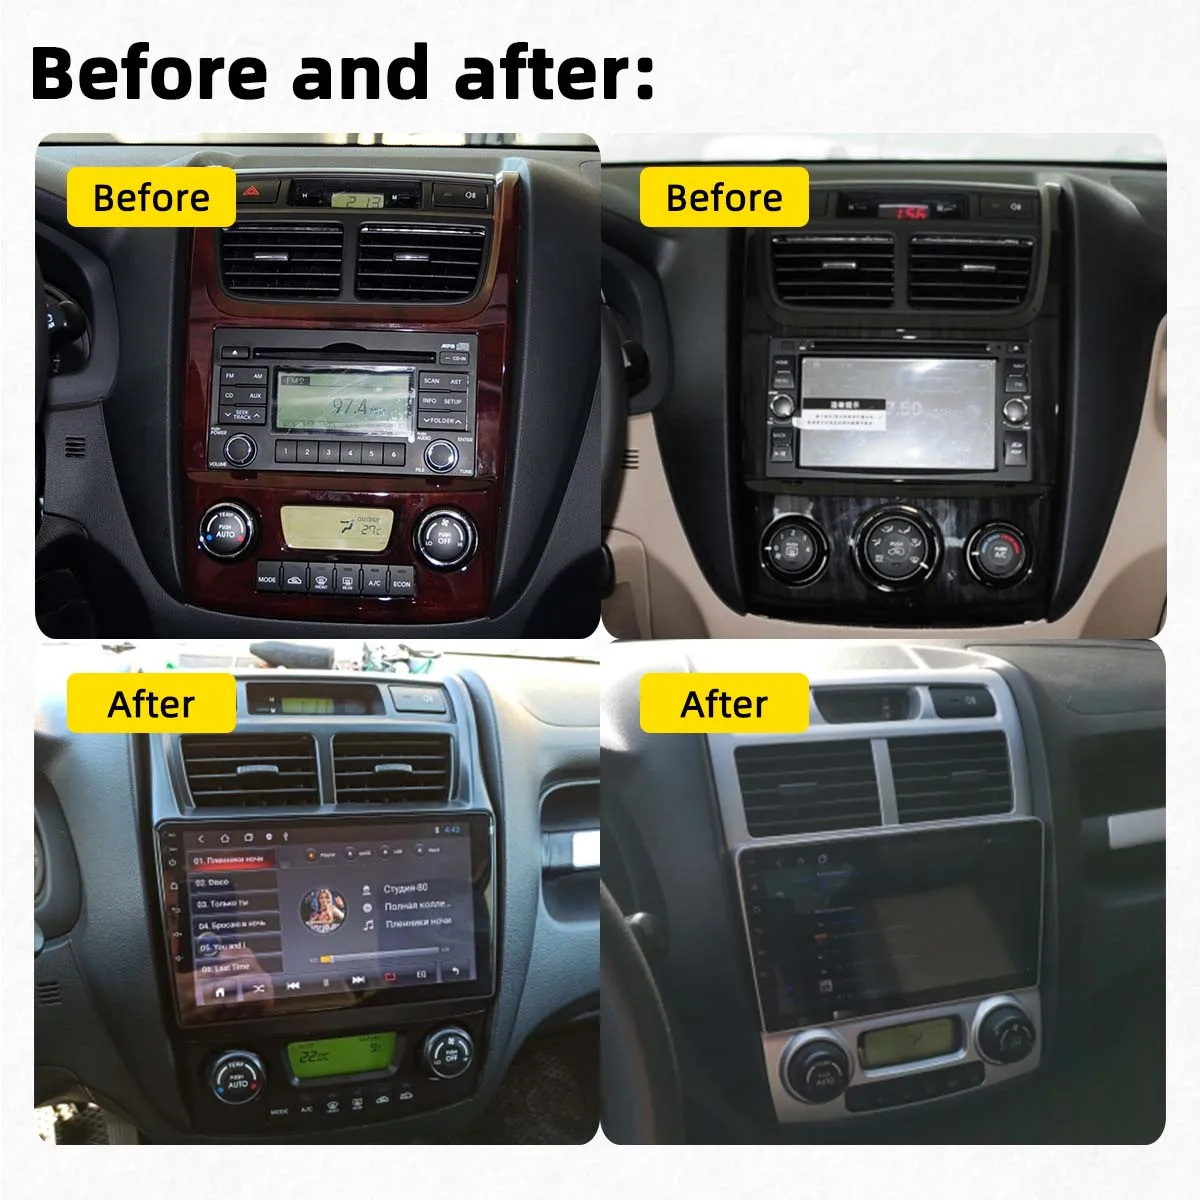 2 Din Autoradio עבור KIA Sportage 2007-2013 רדיו במכונית סטריאו WiFi Carplay ניווט GPS מולטימדיה נגן וידאו יחידת הראש